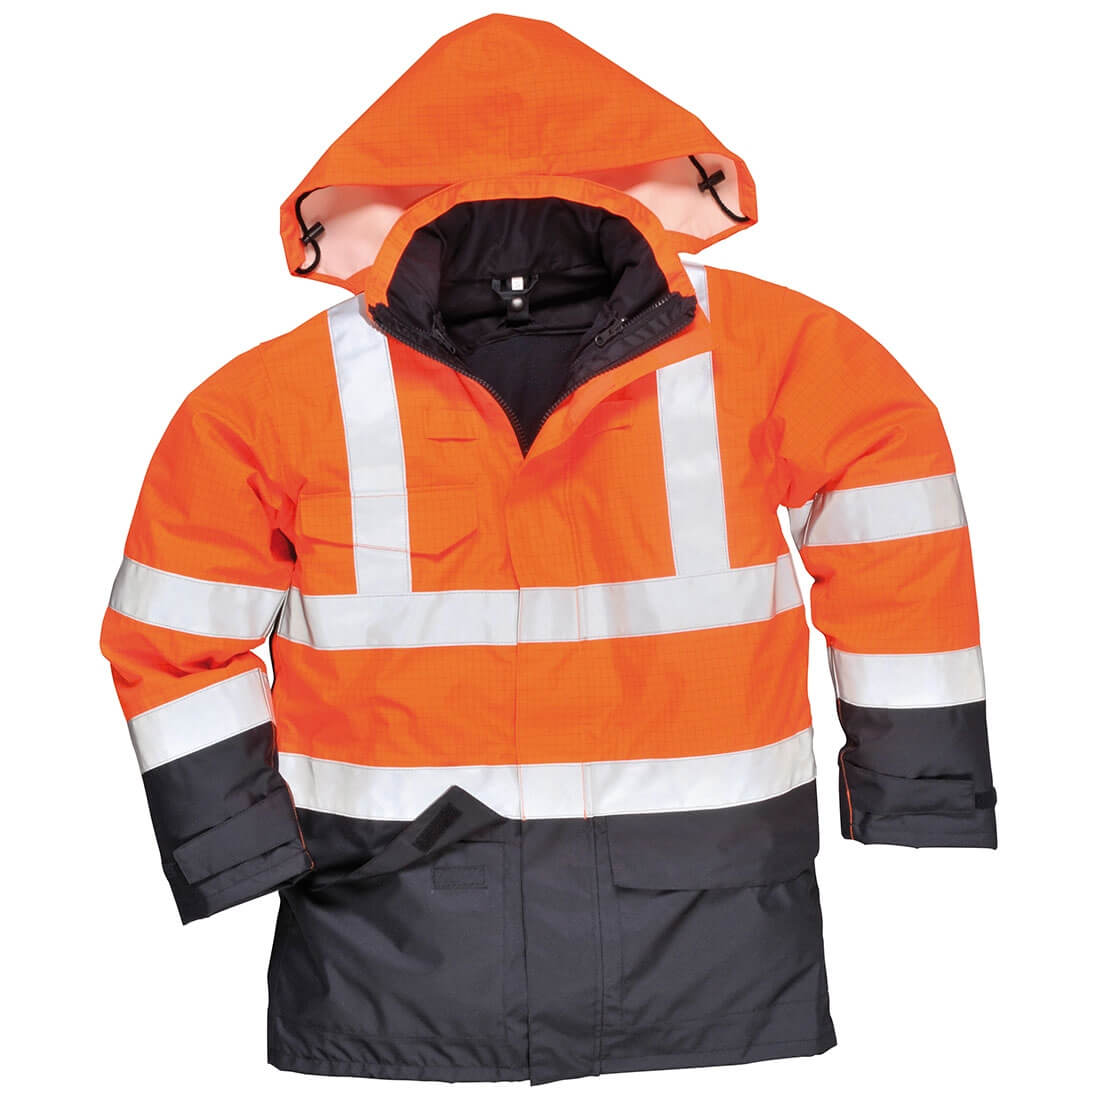 Bizflame Rain Hi-Vis Multi-Protection Jacket - Safetywear